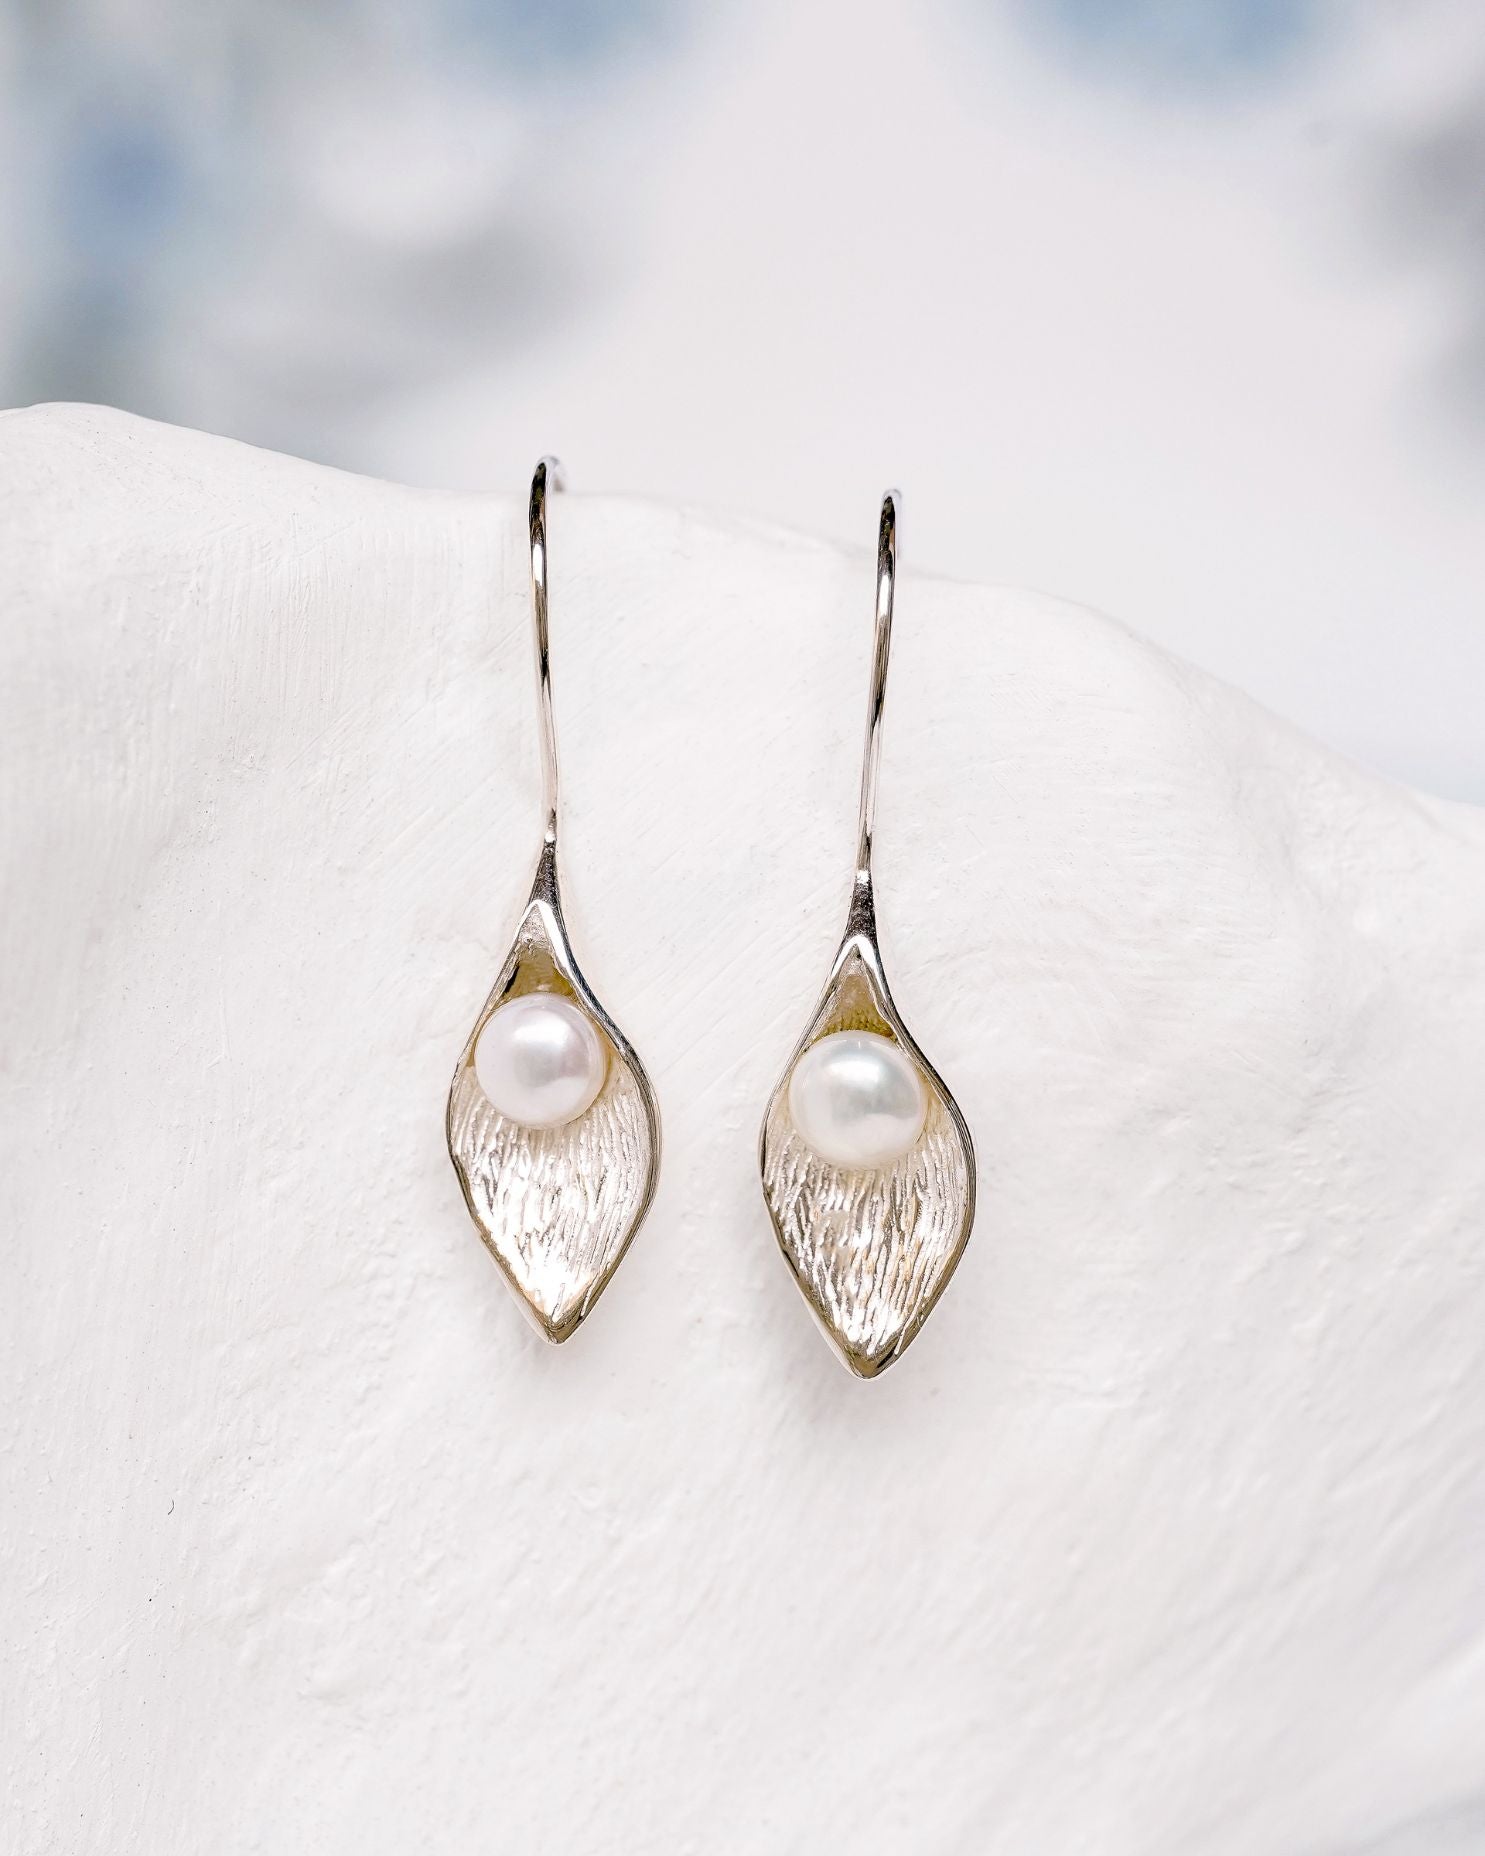 dainty silver drop earrings with pearls